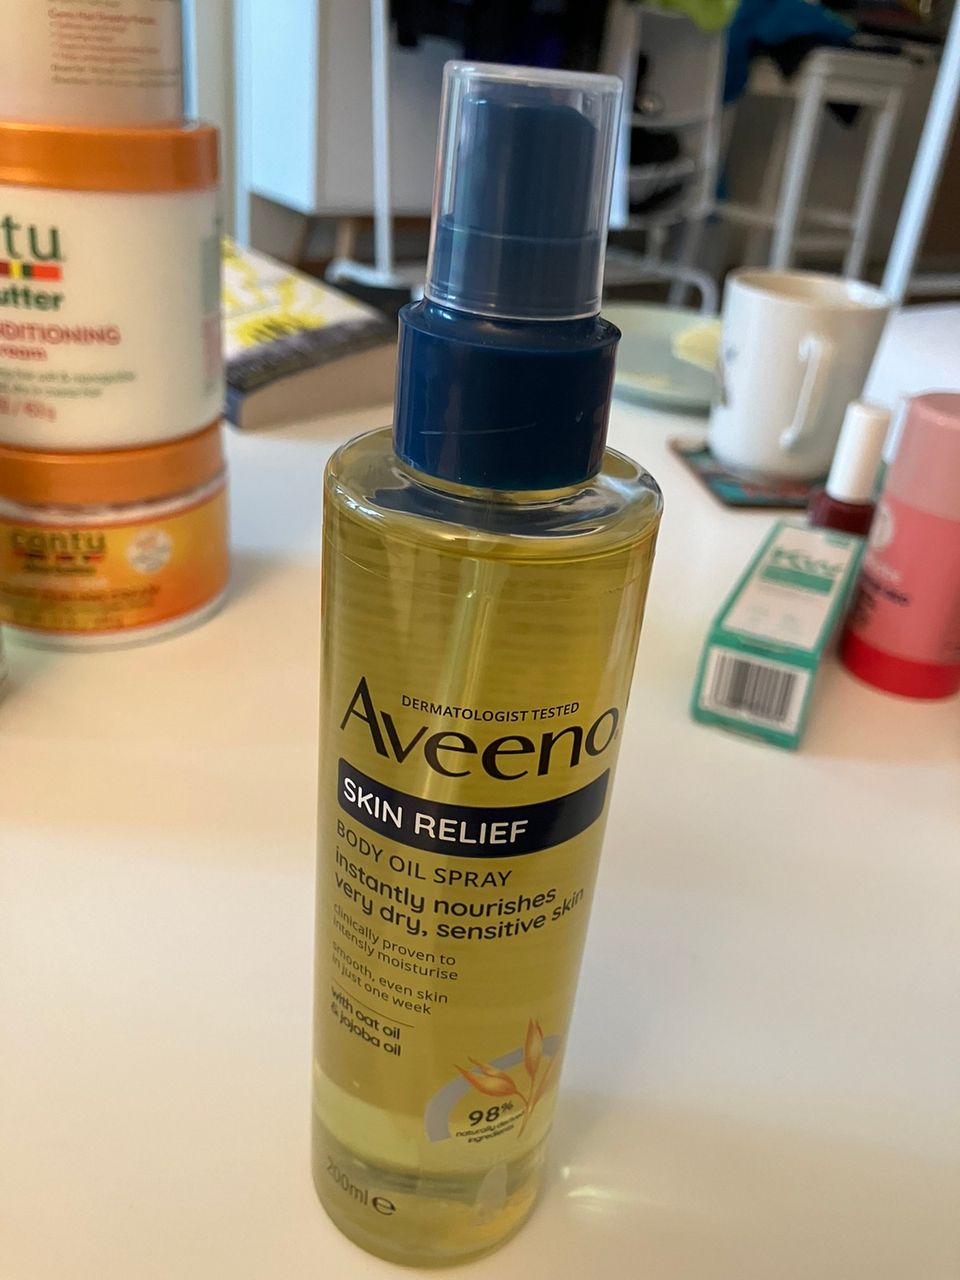 Aveeno skin relief body oil spray